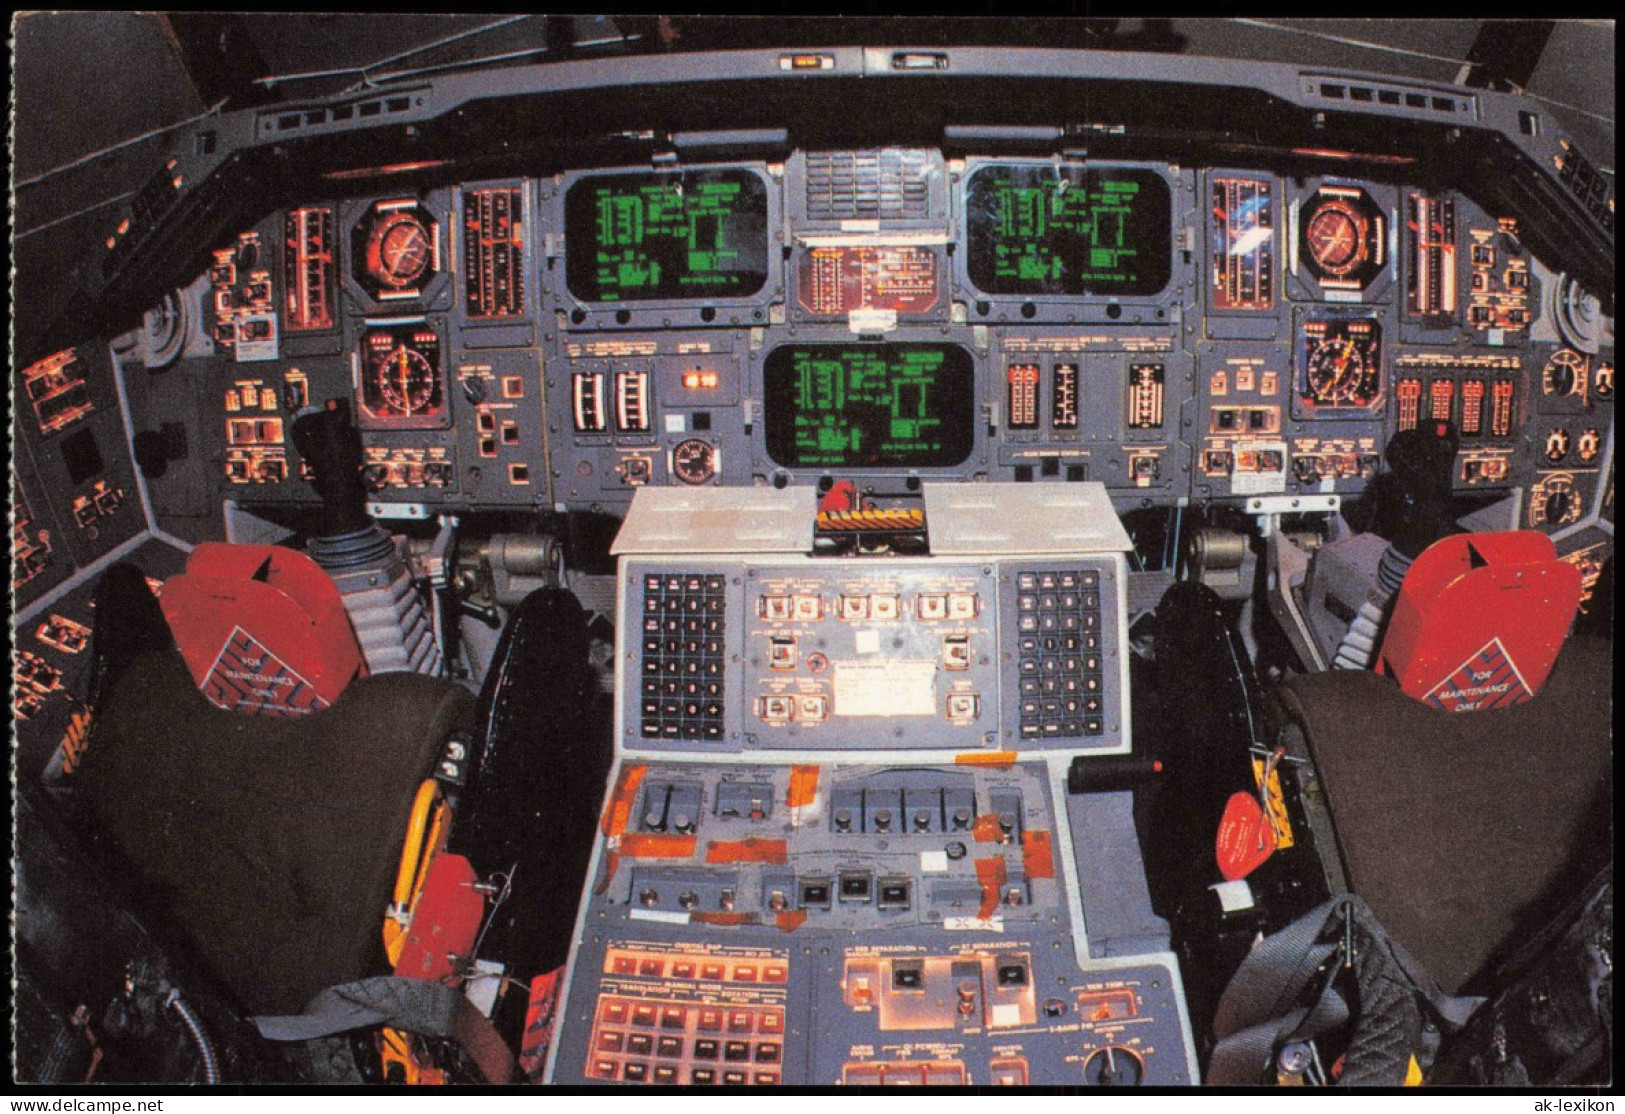 Flugwesen Raumfahrt INTERIOR VIEW OF THE SPACE SHUTTLE FLIGHT DECK 1980 - Espace